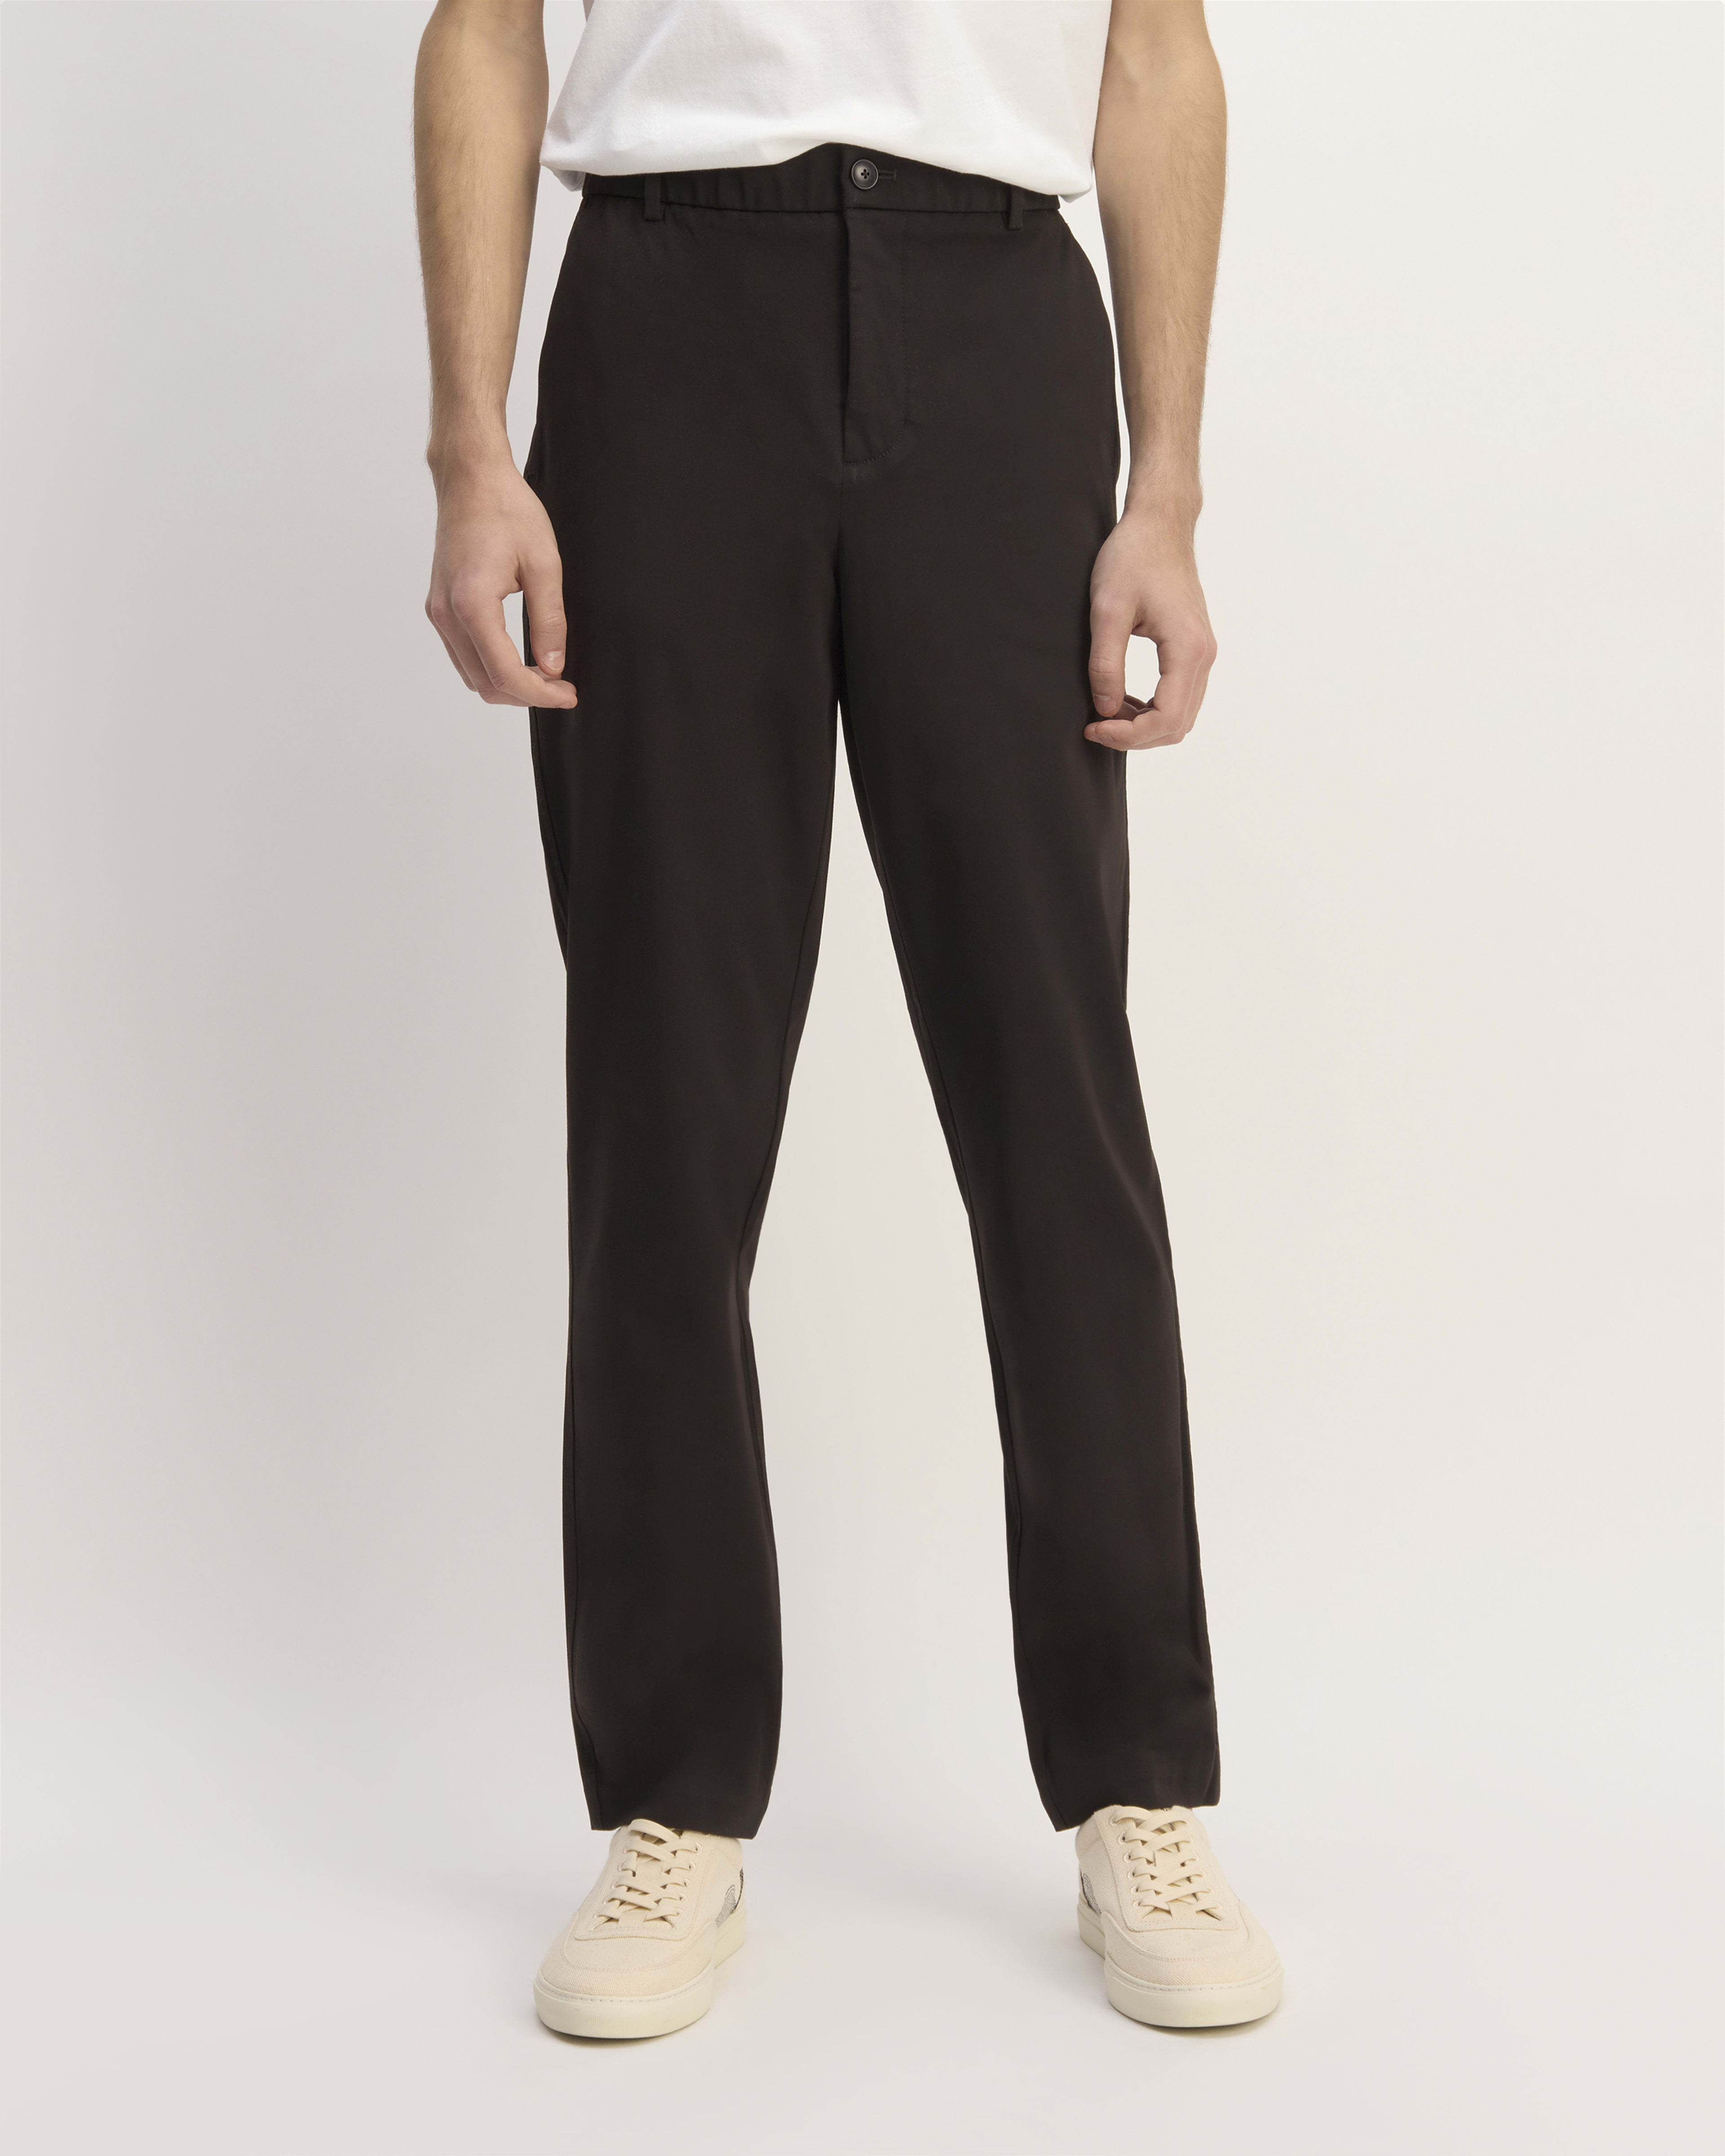 Men's Pants - Chinos, Khakis & Dress Pants – Everlane